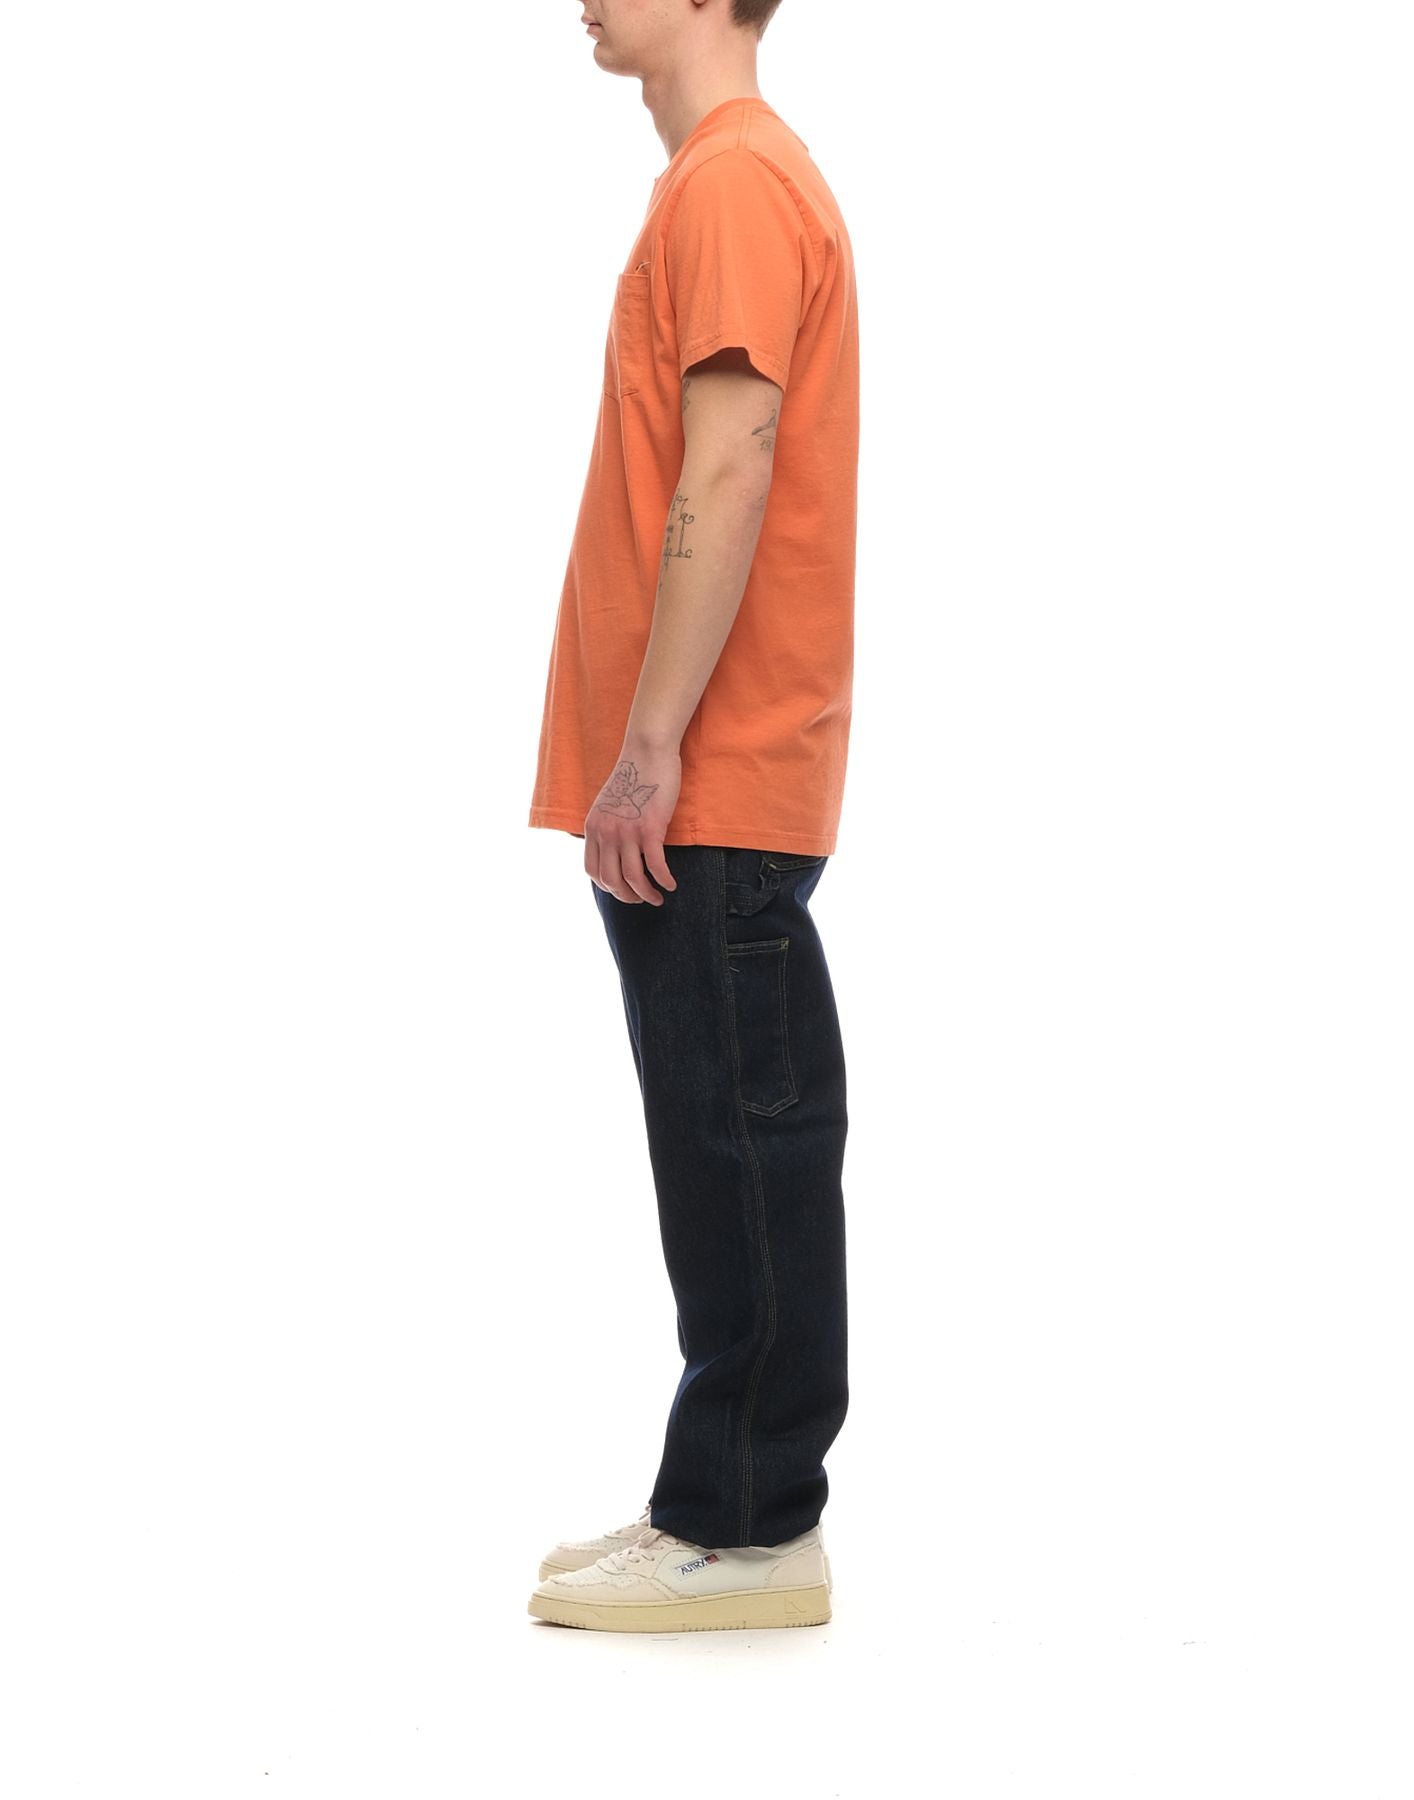 Camiseta para hombres 1317 naranja clara Revolution